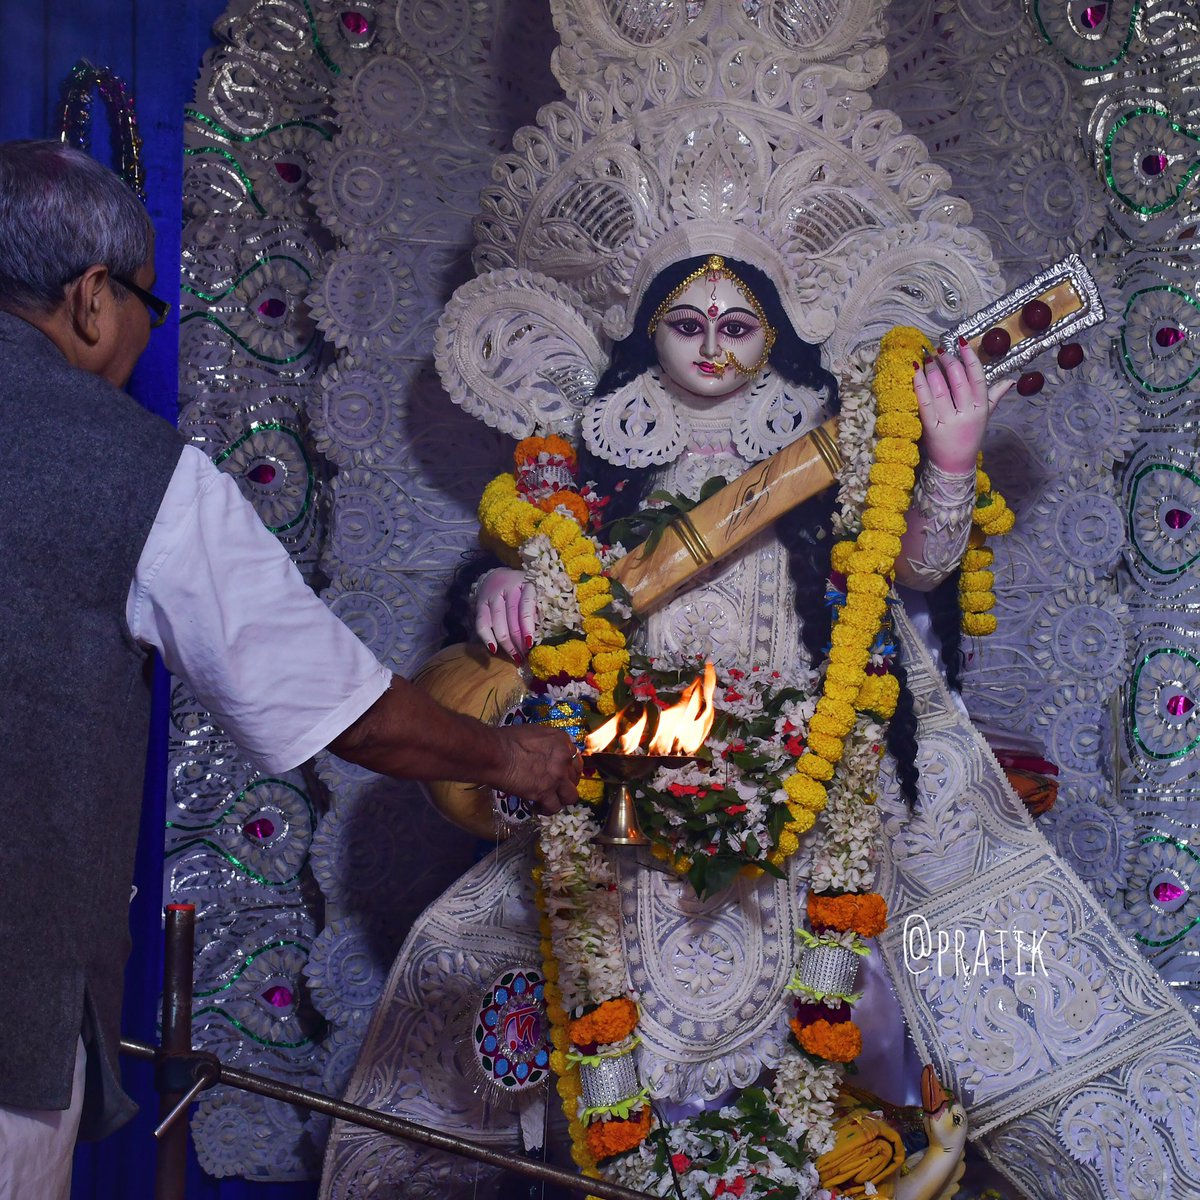 And the pujo #saraswatiPujo #SaraswatiPuja in #Kolkata #festivalsofindia